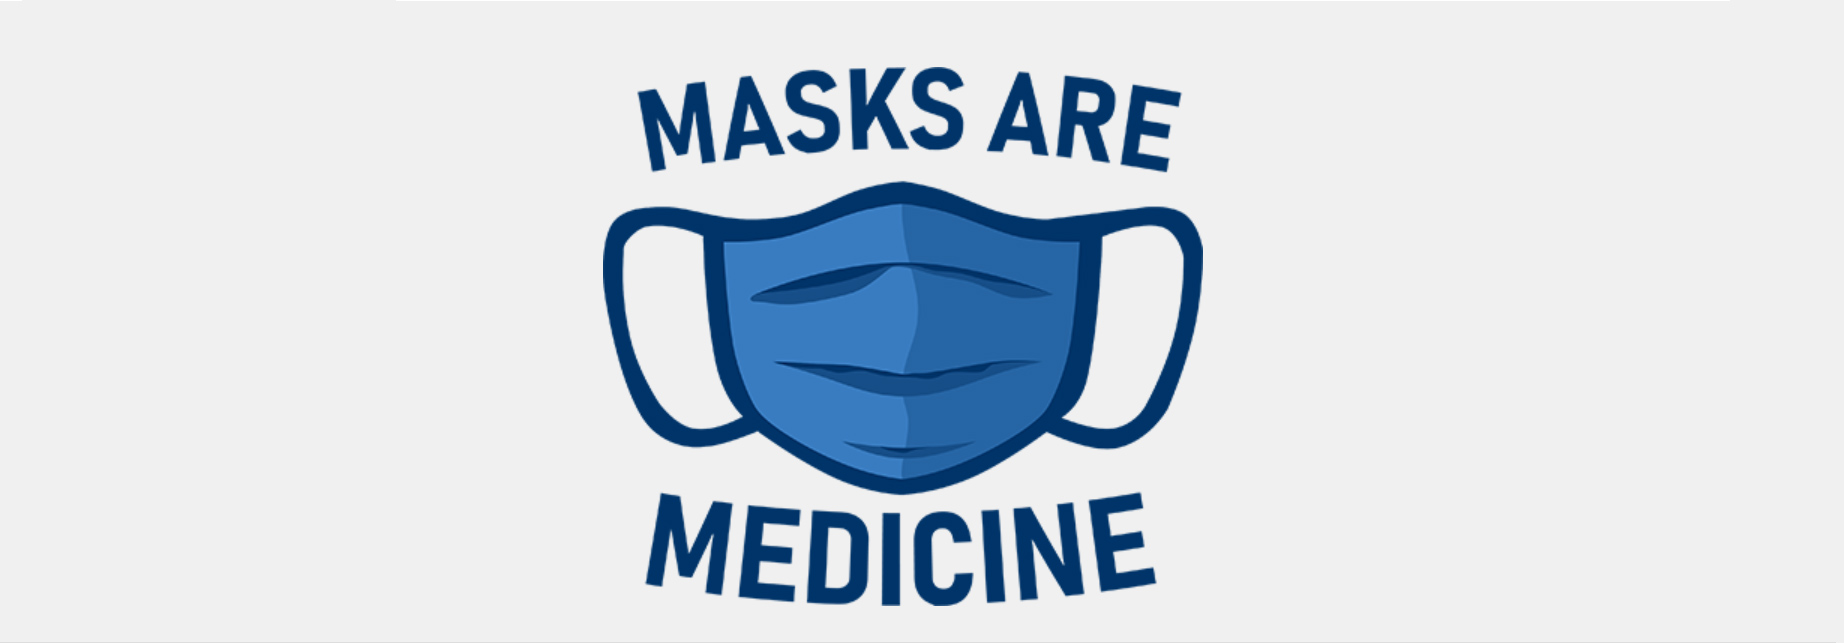 masks are medicine